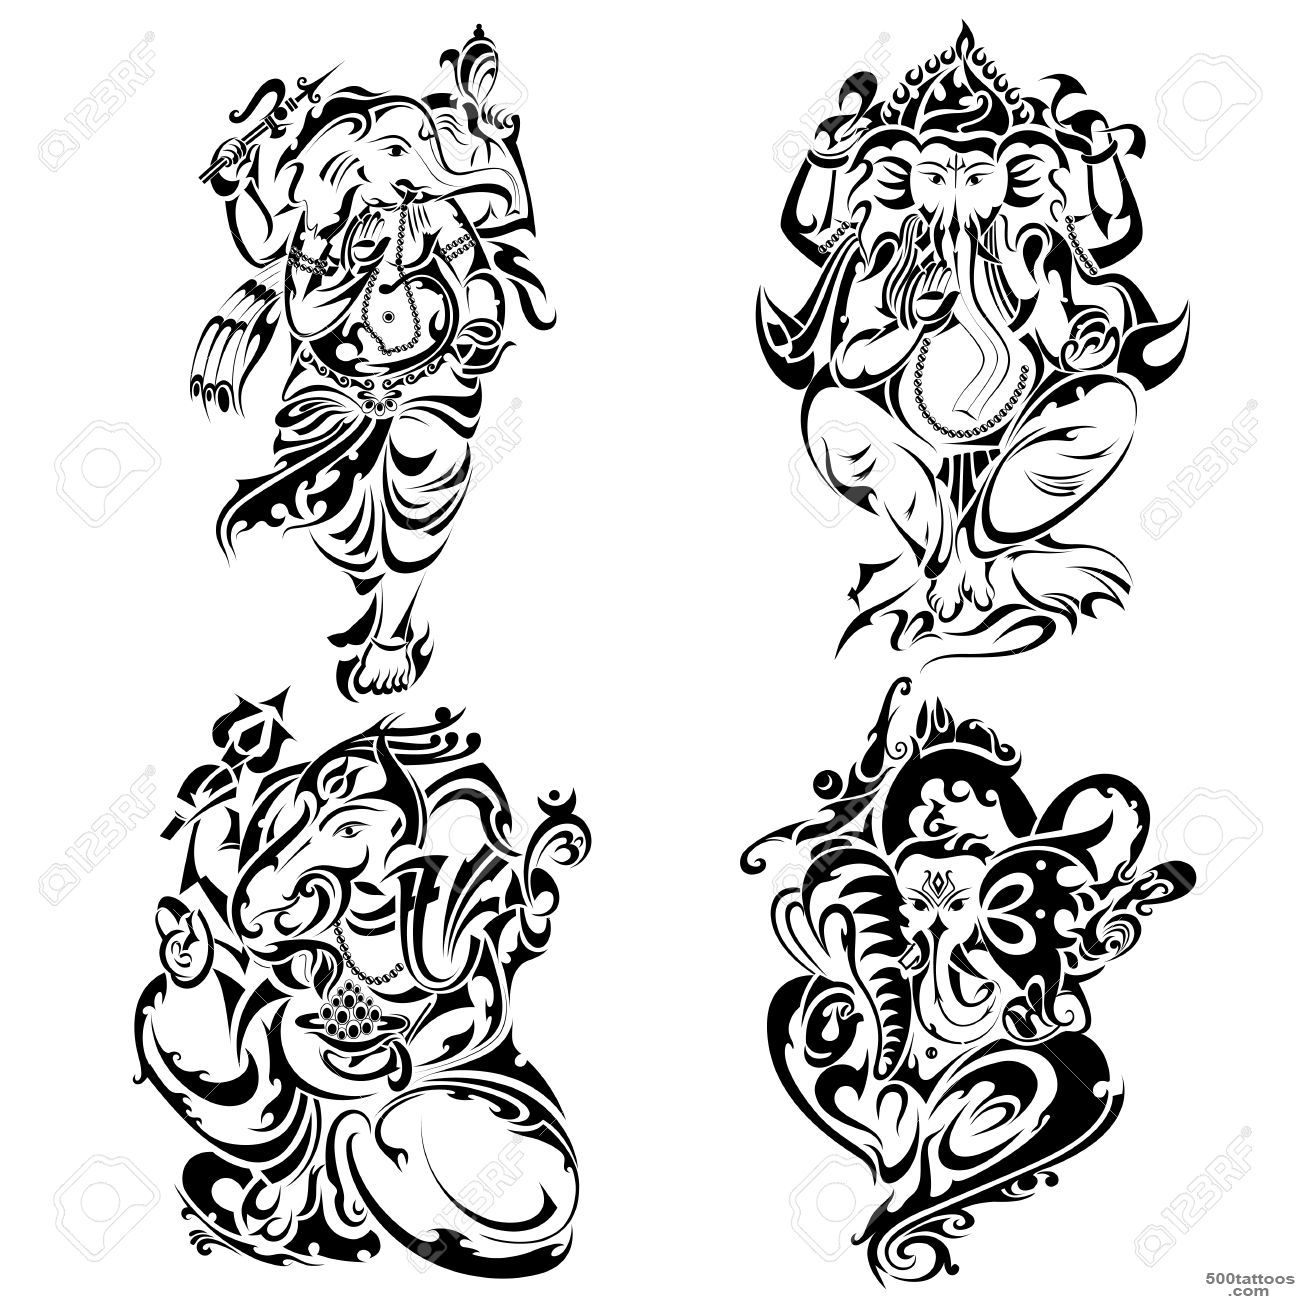 Tattoo Style Lord Ganesha Royalty Free Cliparts, Vectors, And ..._45